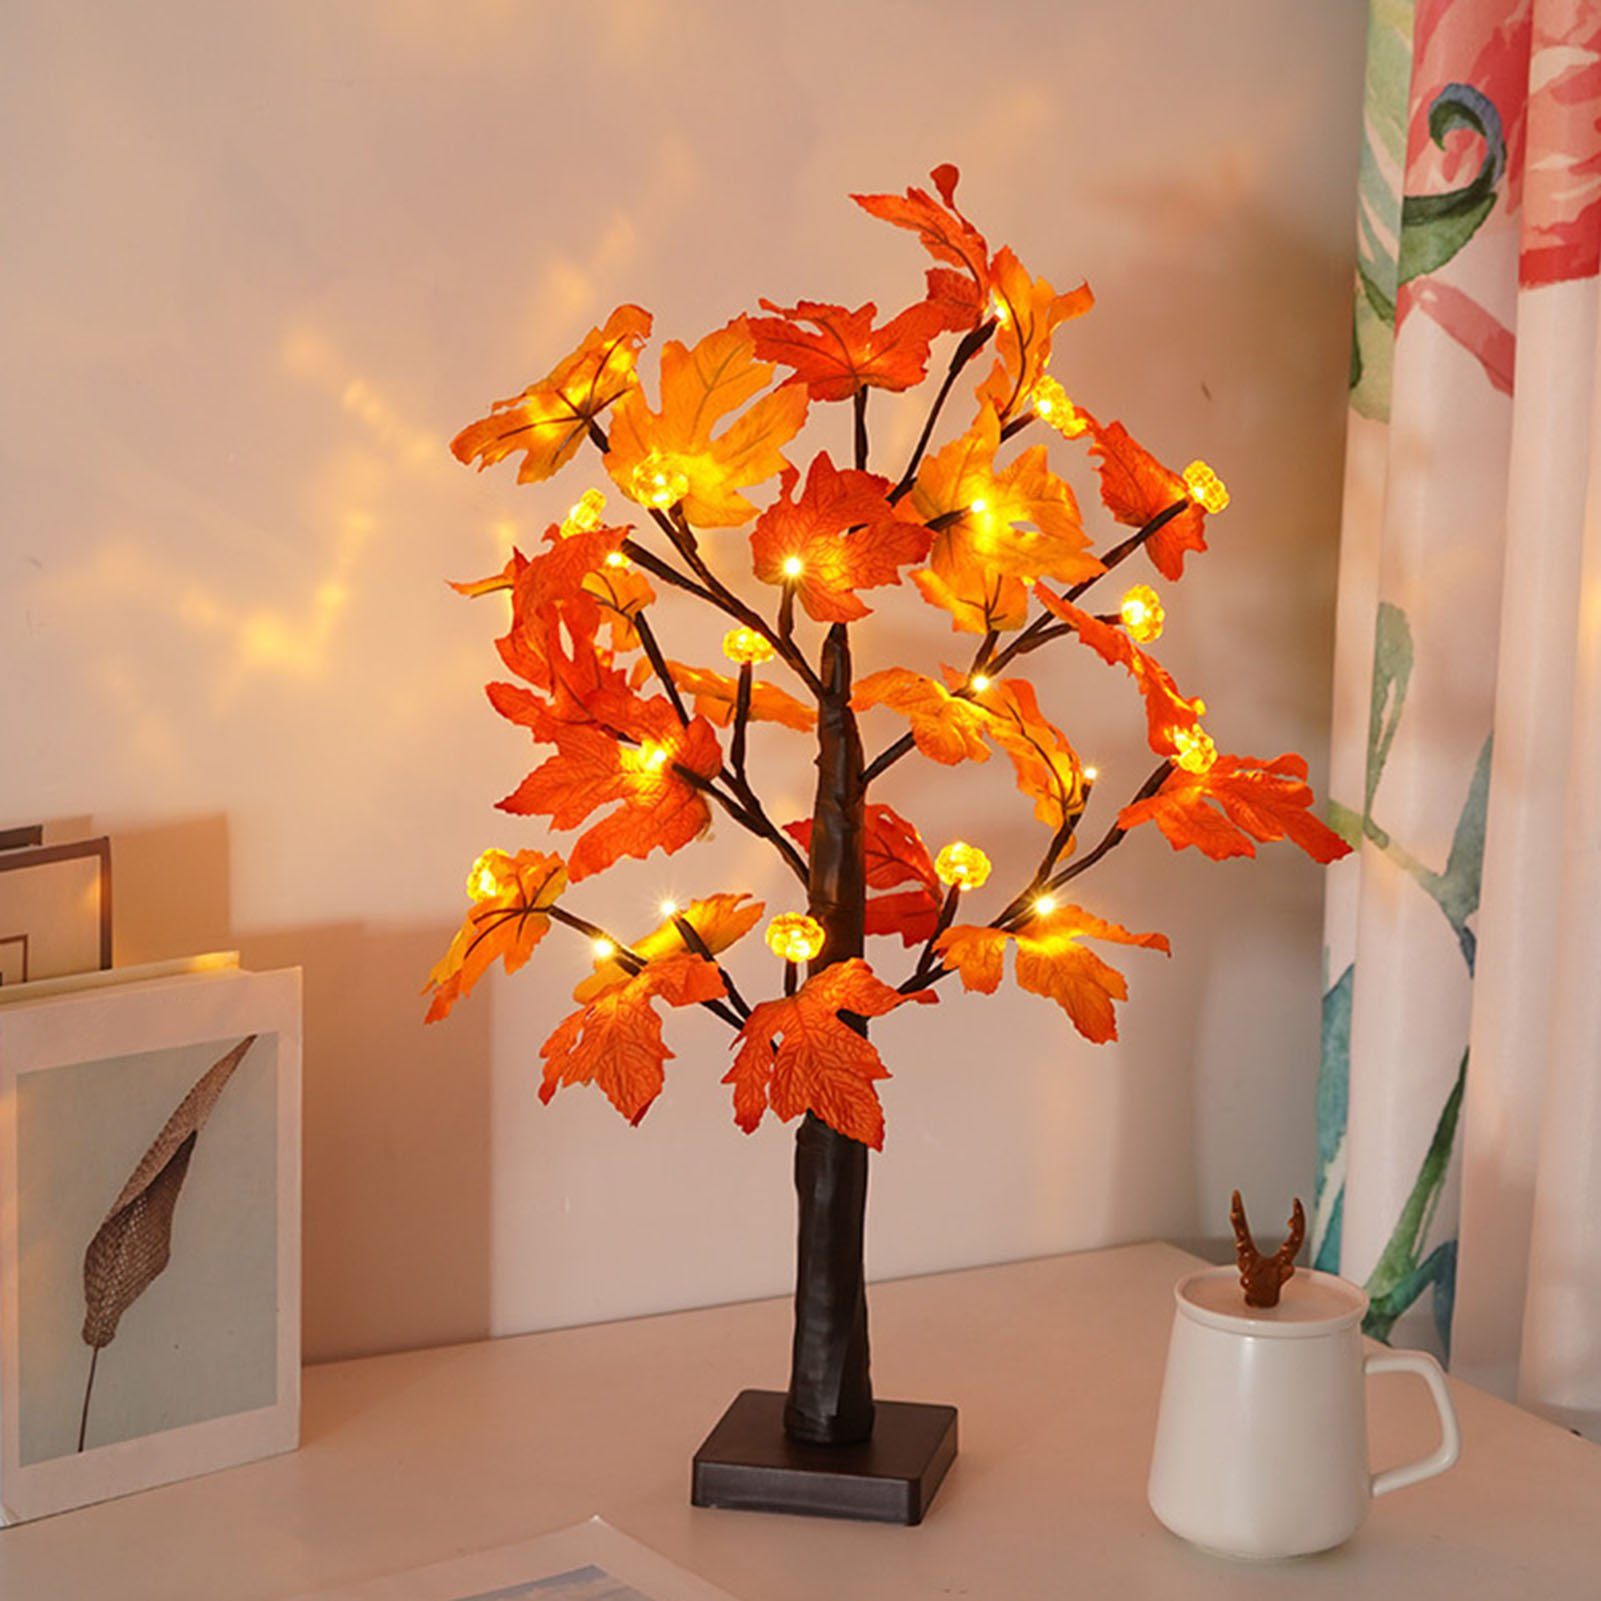 spottbillig Rutaqian Lichterkette Licht, LED Lichterketten Dekoration Ahornblatt Blätter Baum